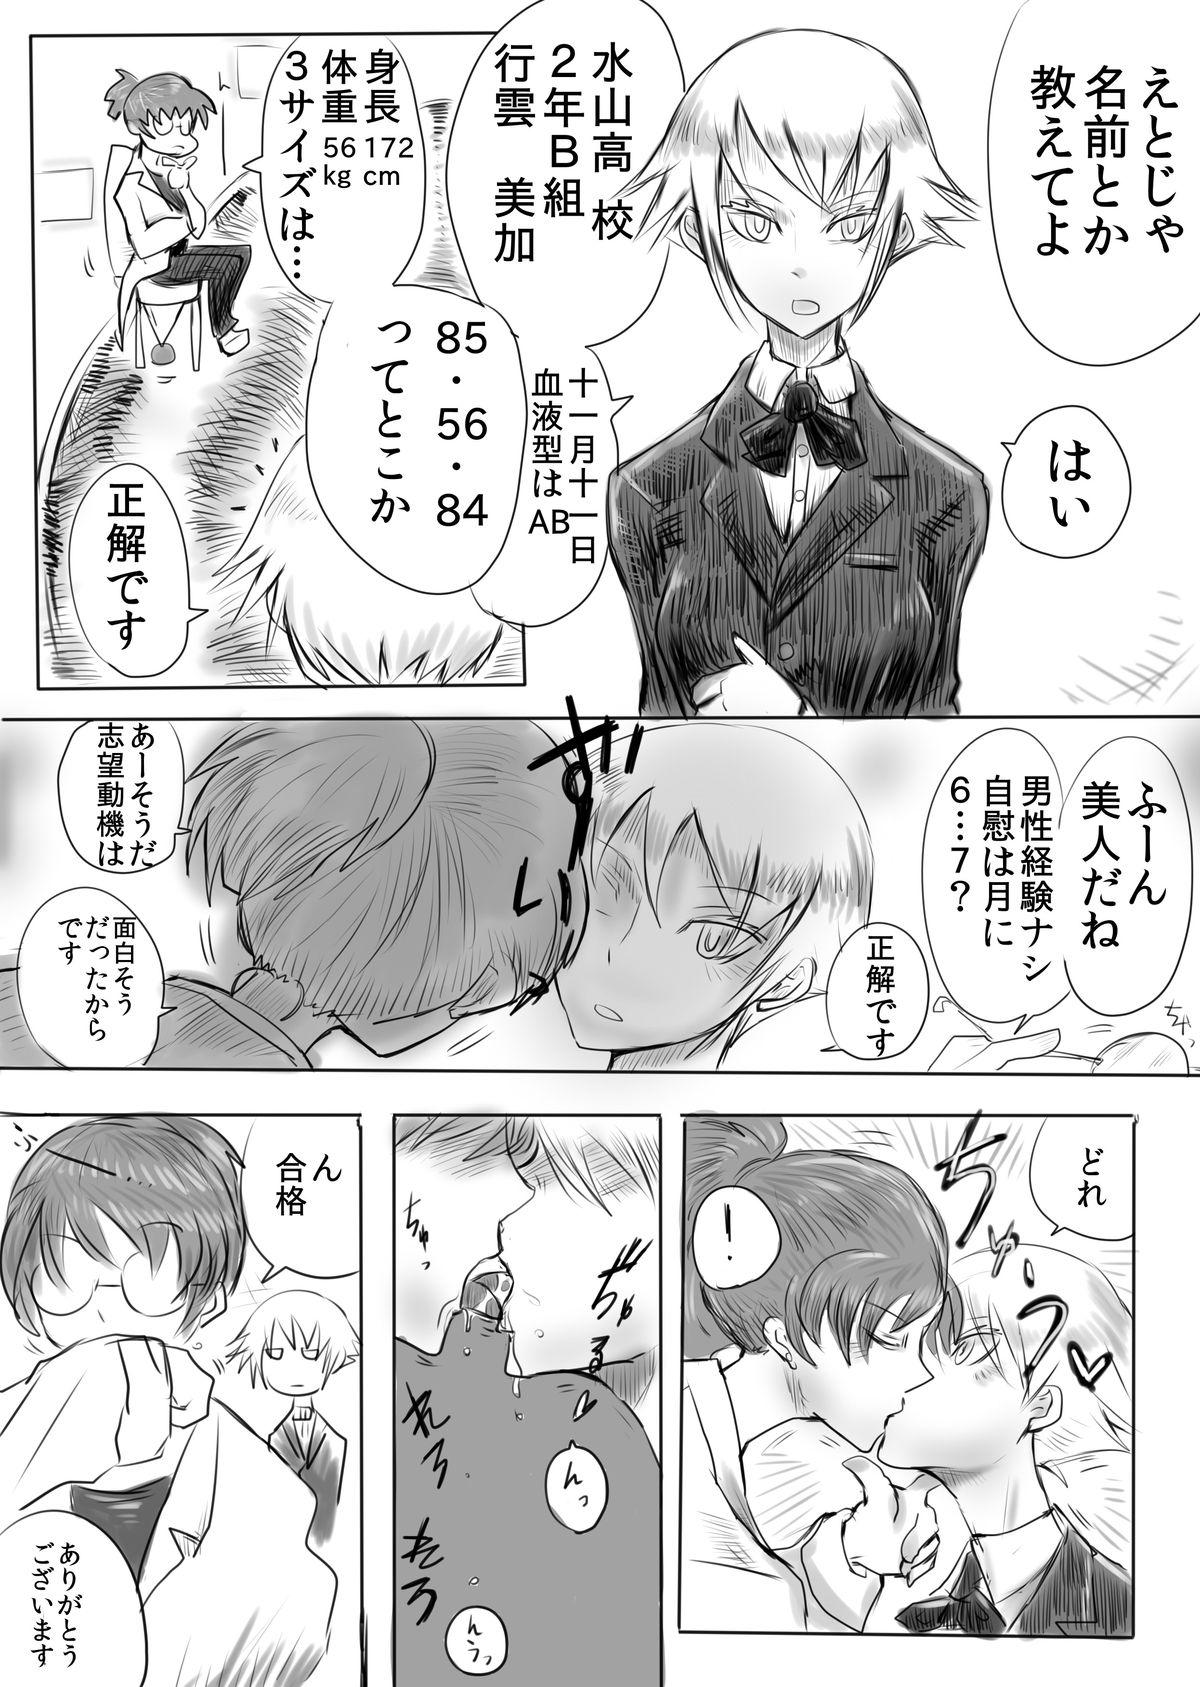 Trio Eroi Manga Shuusaku "Baito Immoral" Passionate - Page 2